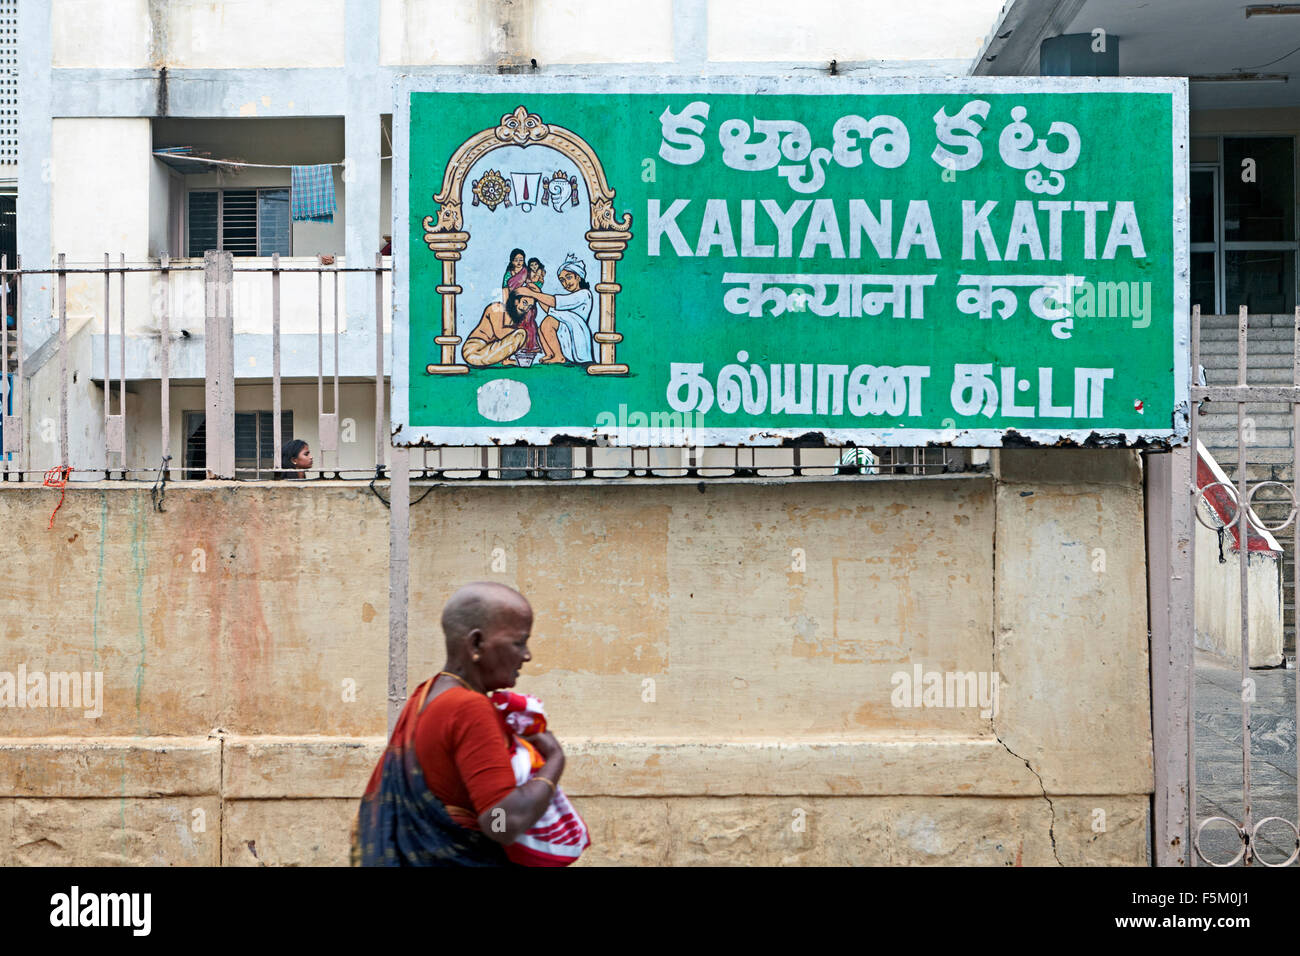 Dipinto di segno bordo di balaji kalyanakatta tempio tirupati, Andhra Pradesh, India, Asia Foto Stock